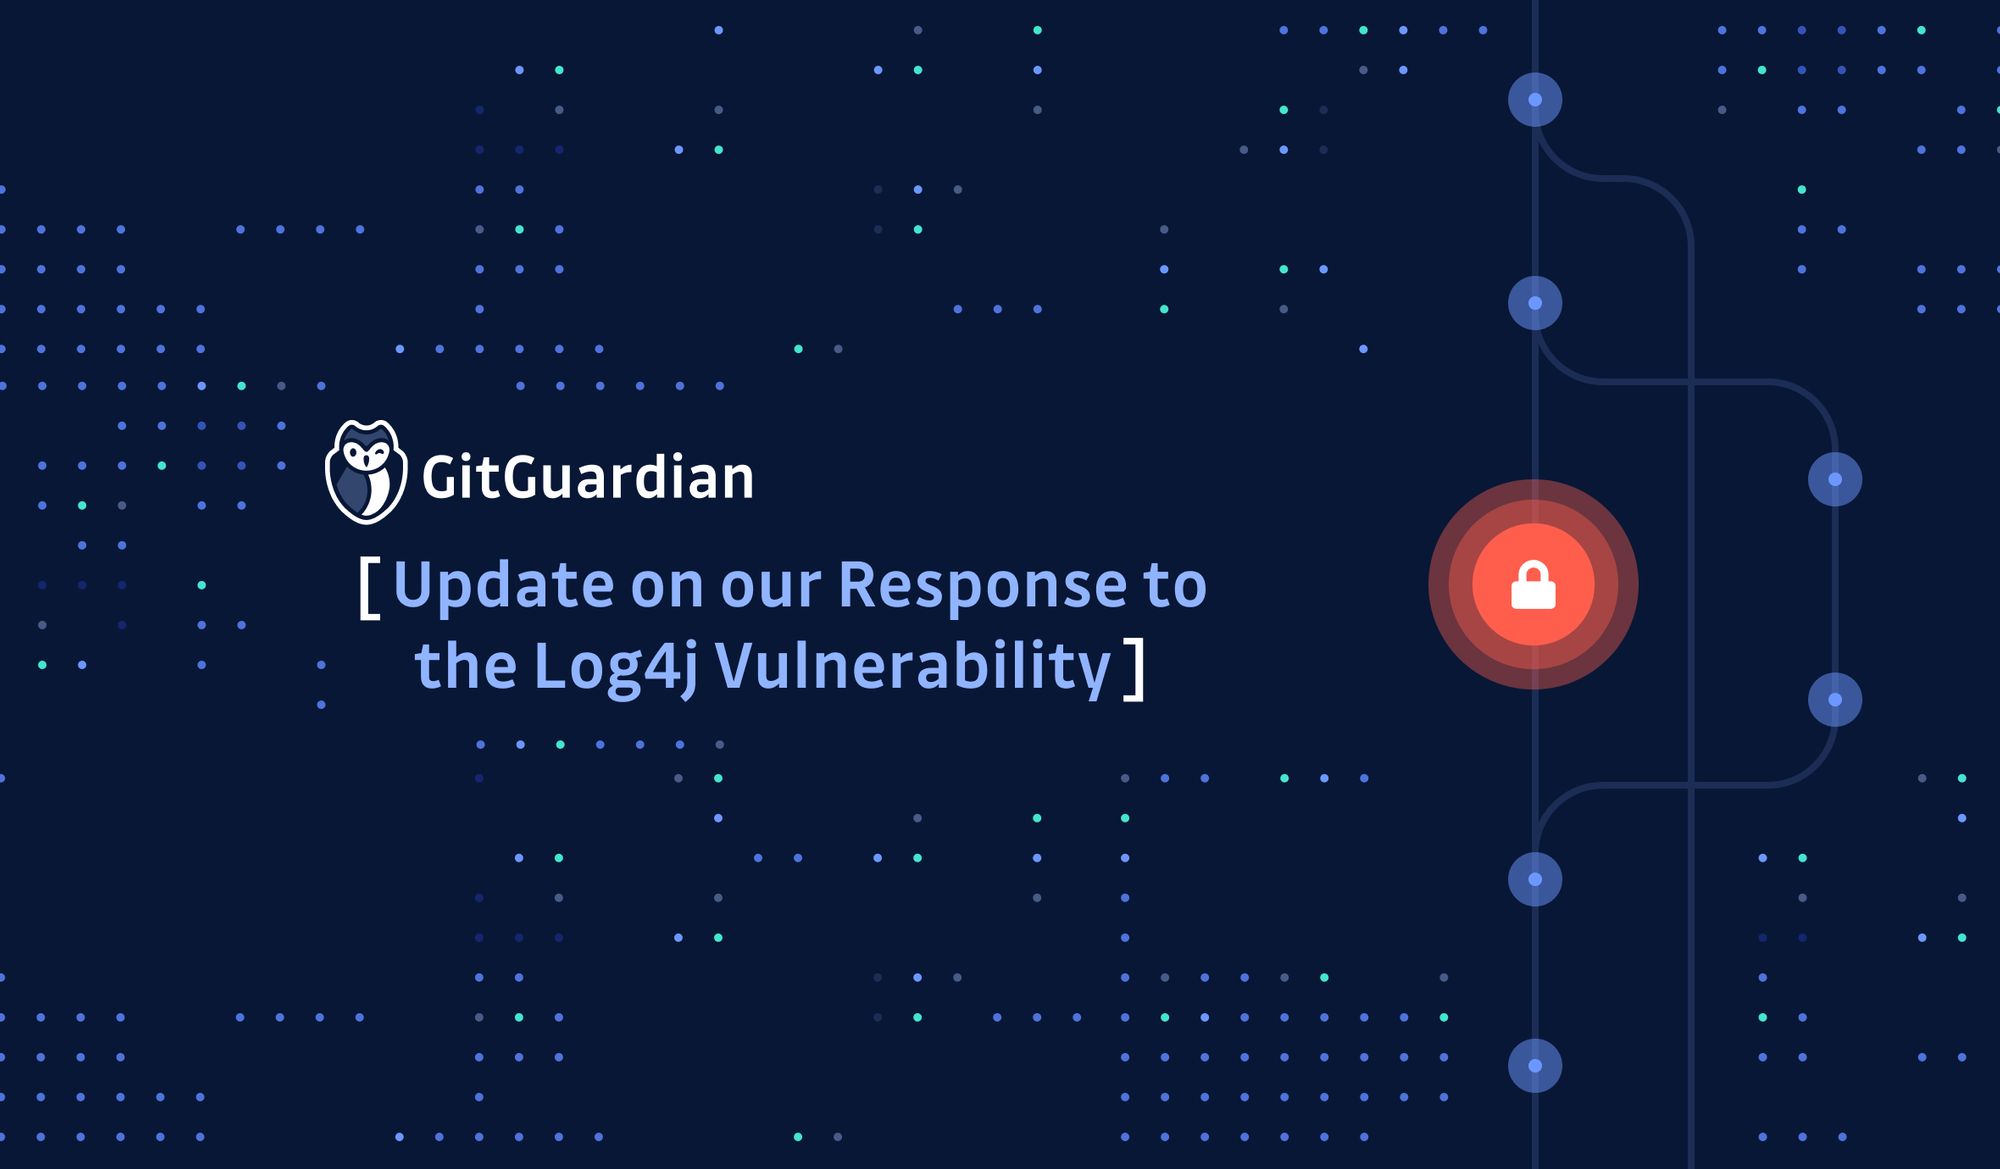 GitGuardian's Response to the Apache Log4J/Log4Shell Vulnerability